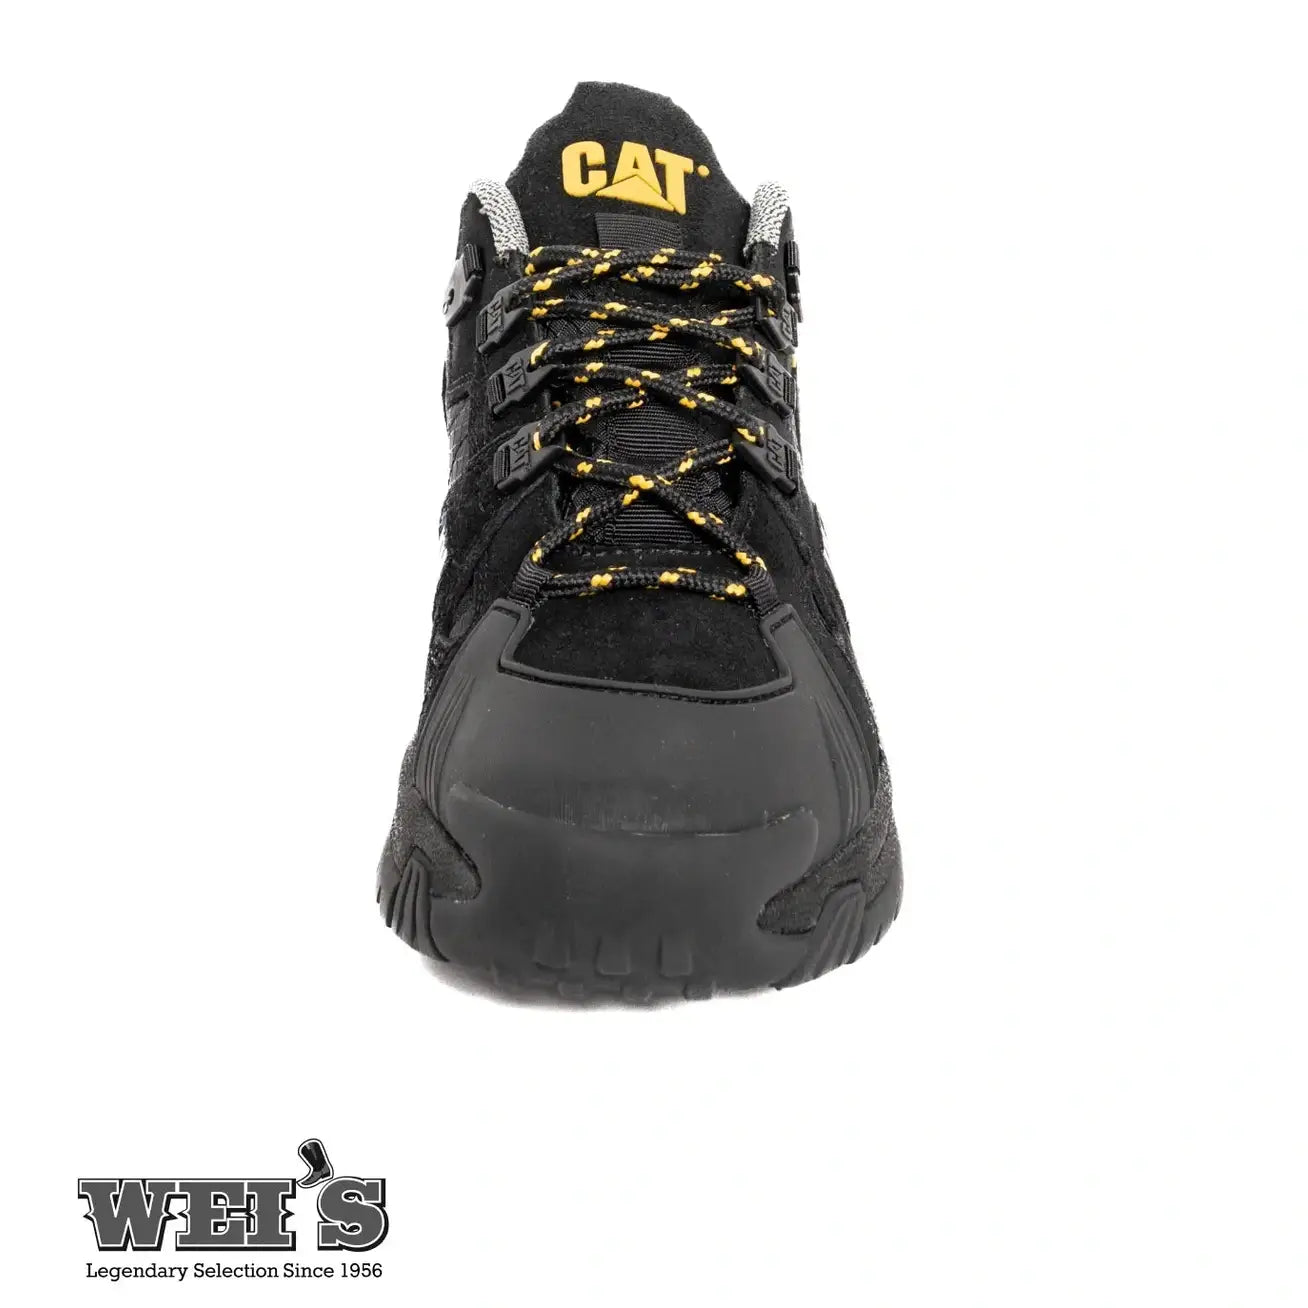 CAT Men's Black Striker Black Hiking Boot 84379 - Clearance - Clearance